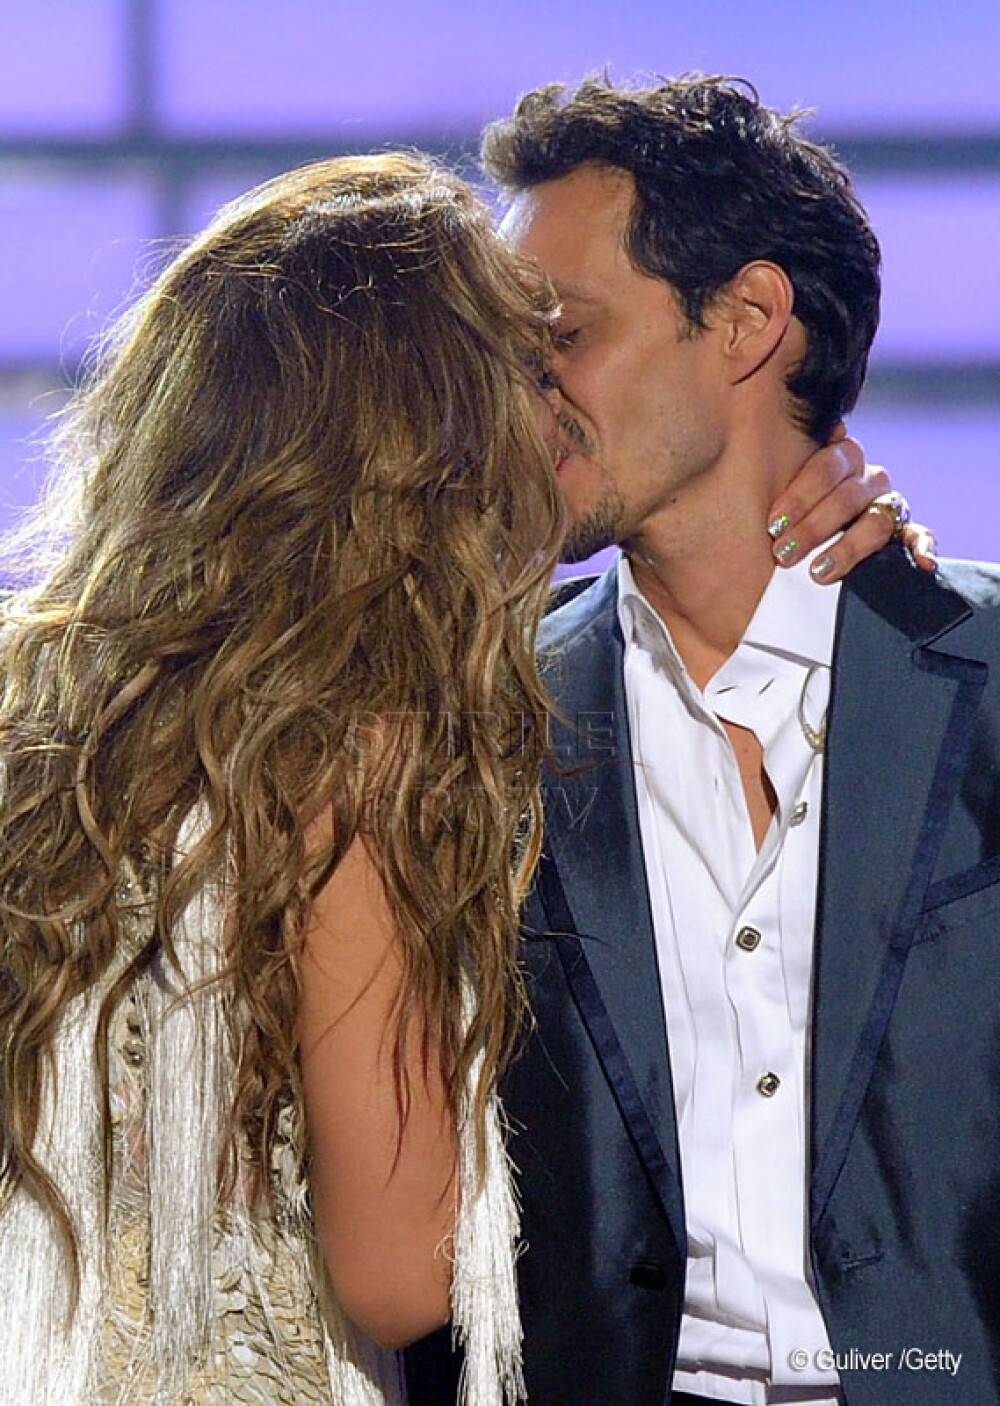 Scene fierbinti. Jennifer Lopez si-a innebunit sotul in fata publicului - Imaginea 4